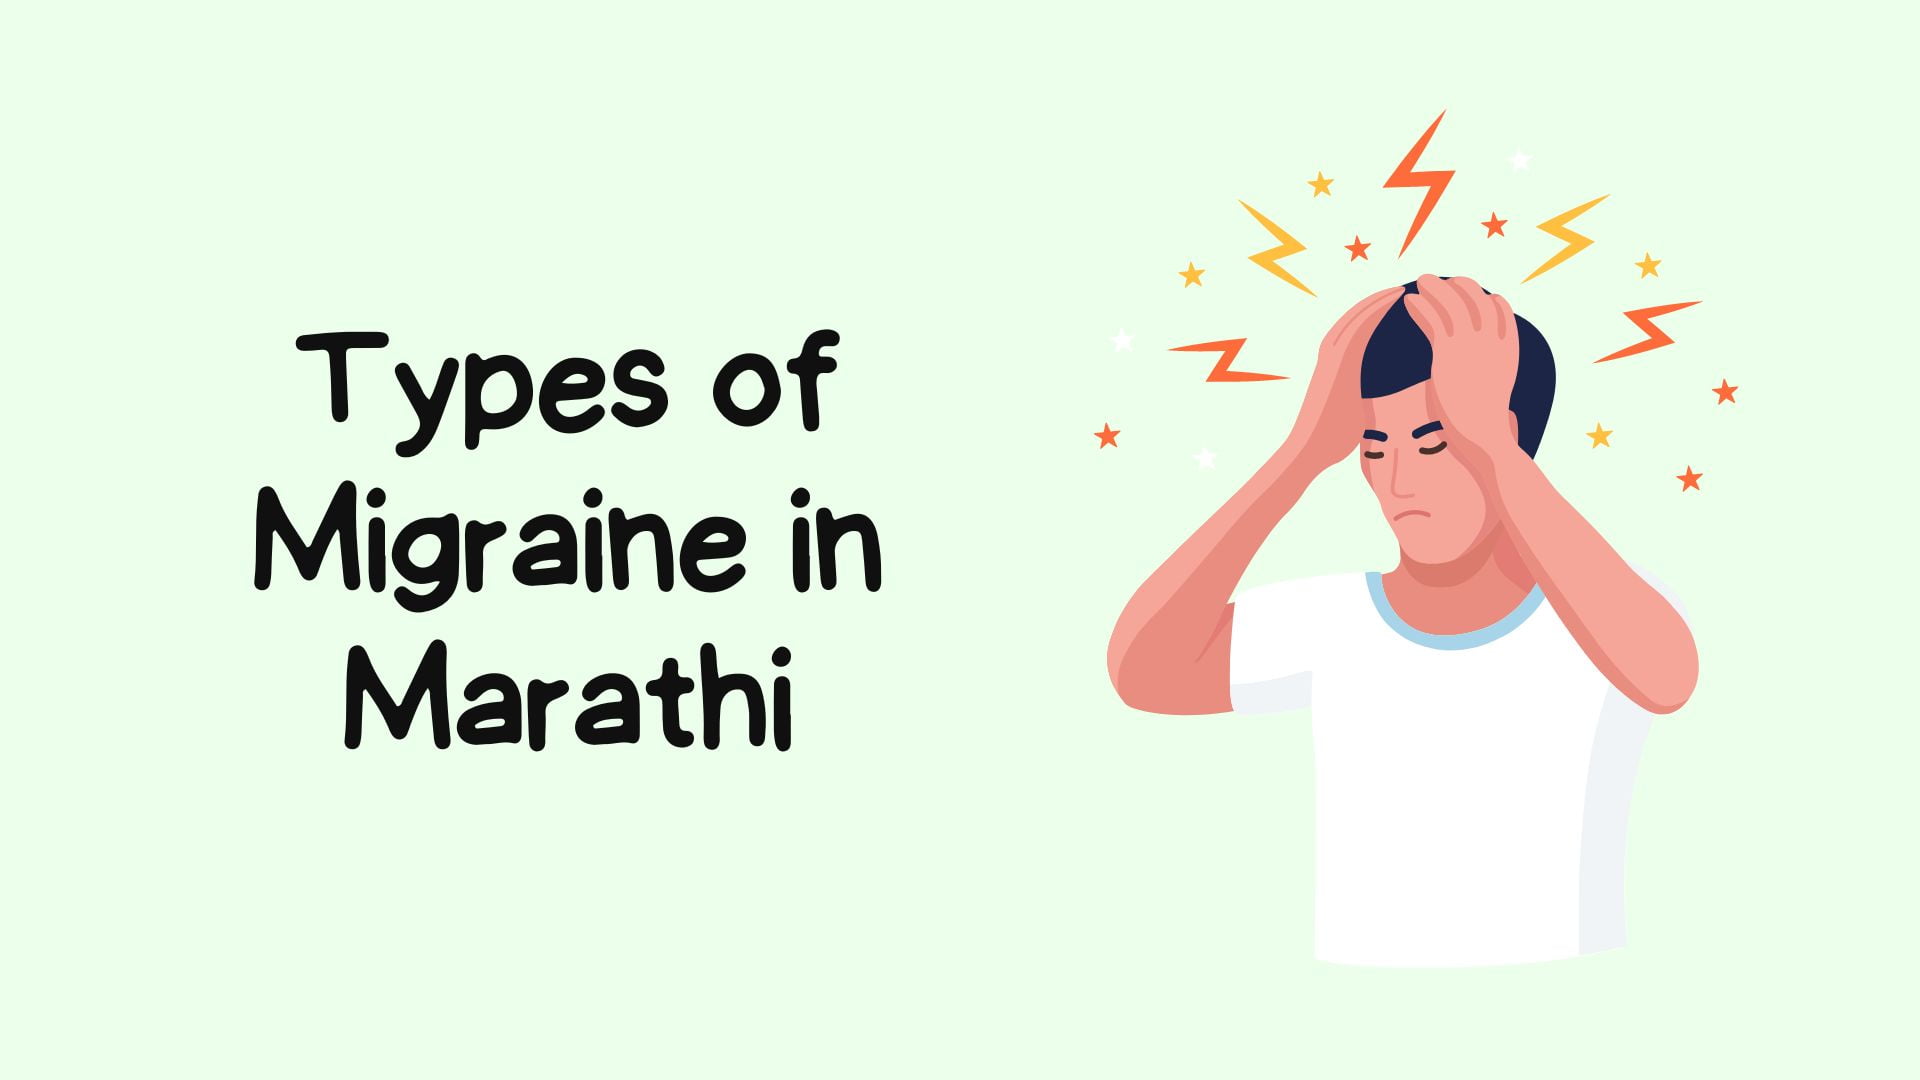 Types of Migraine in Marathi